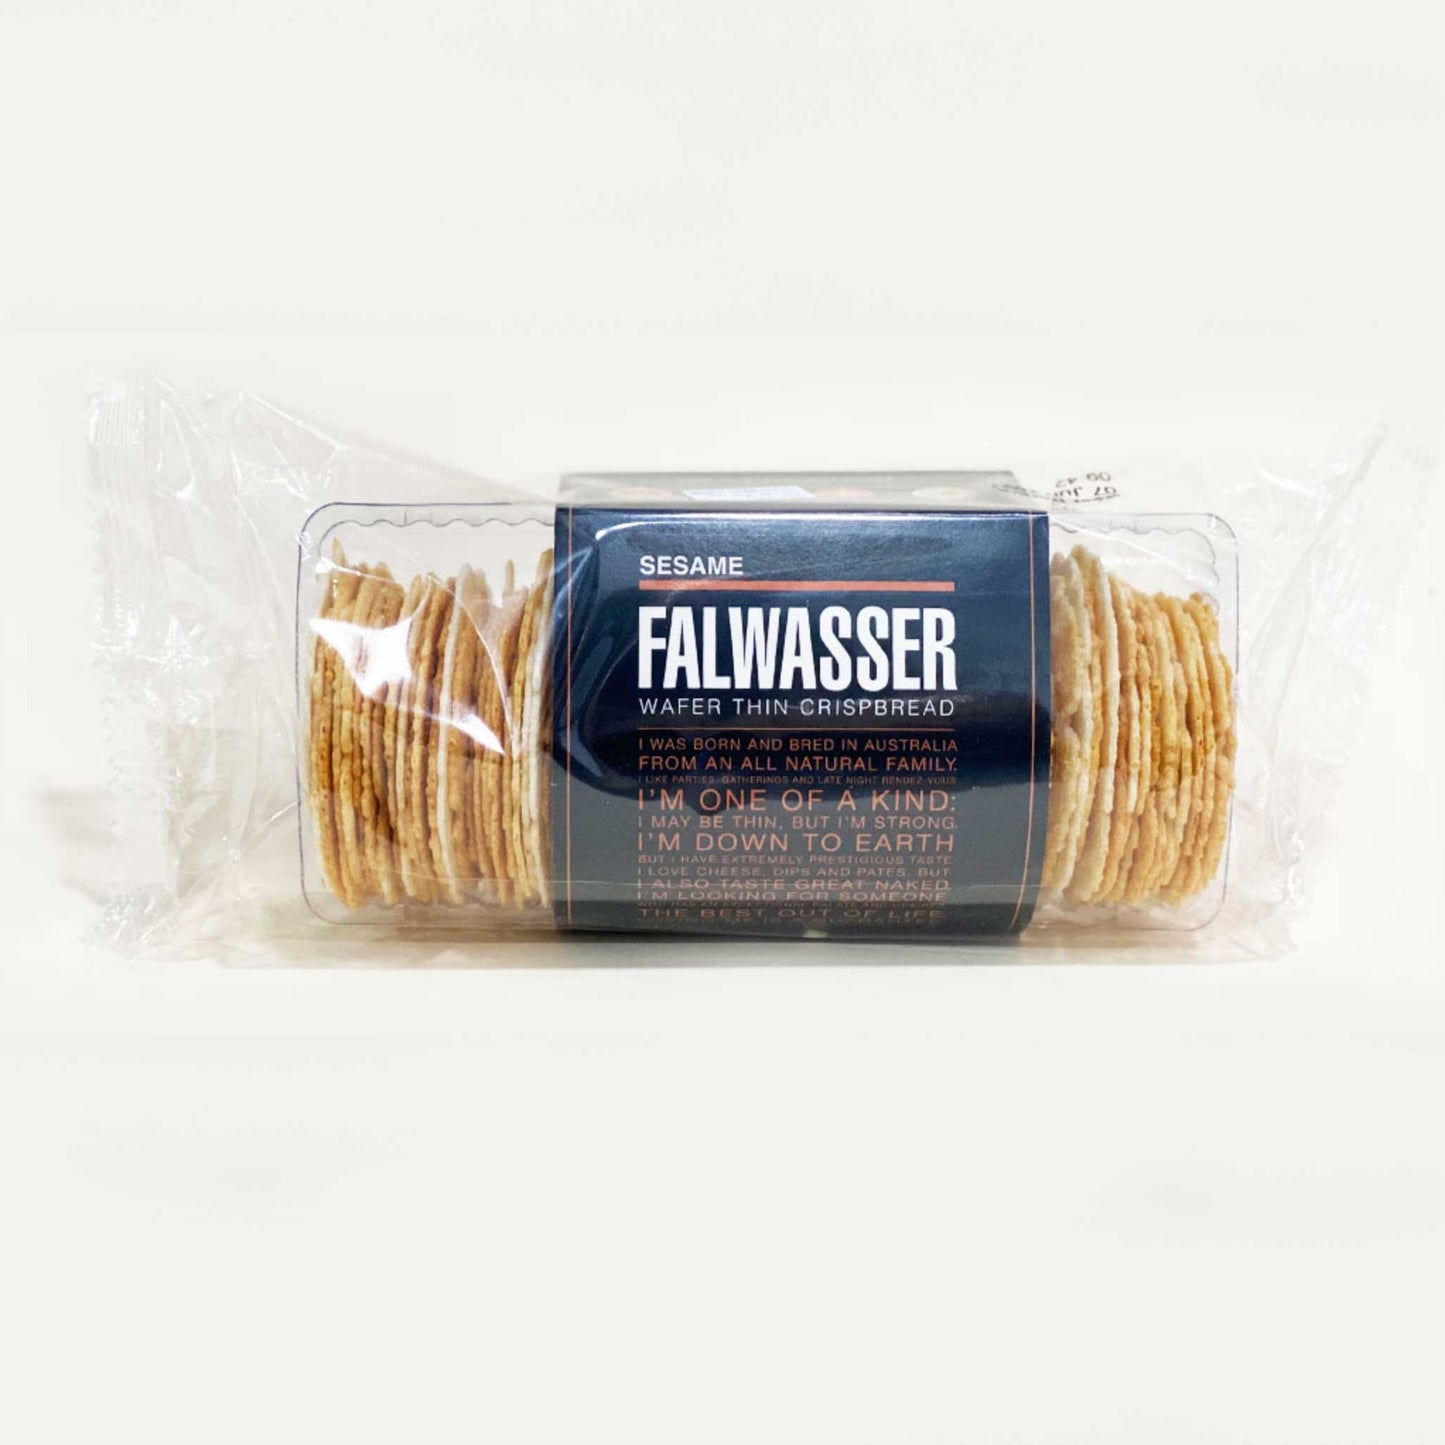 Falwasser Wafer Thin Crispbread - Sesame